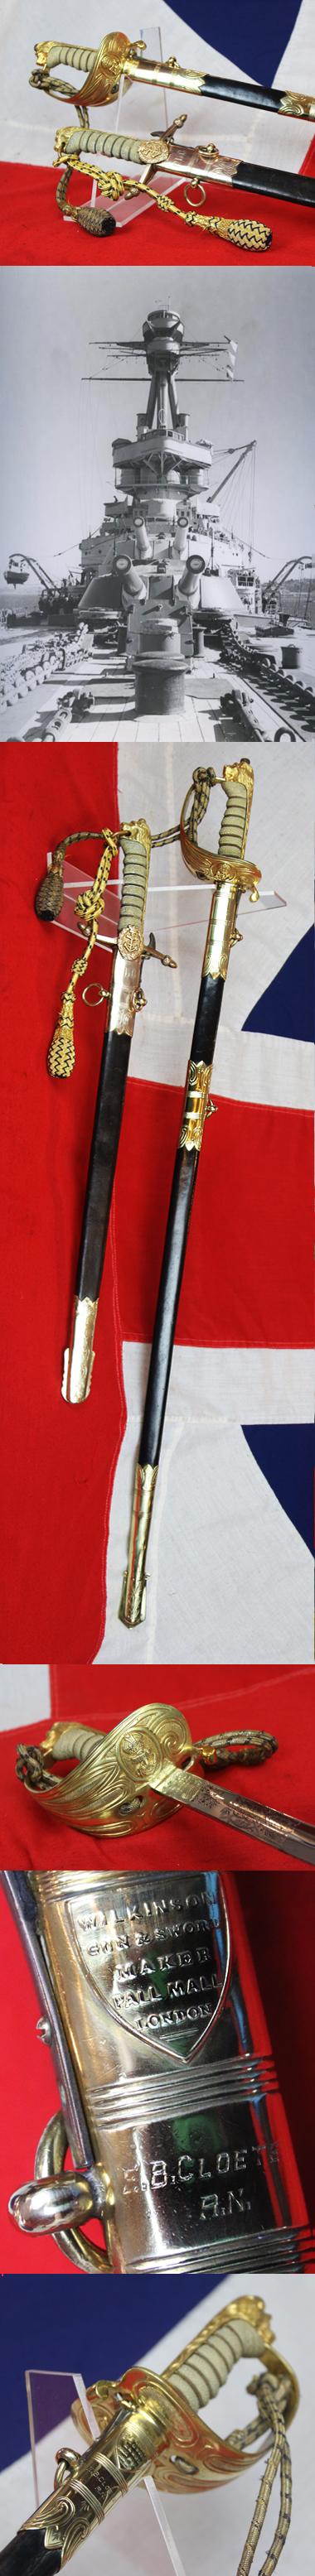 British Admiral’s Royal Naval Wilkinson Sword of Rear-Admiral Edward Balfour Cloete, Royal Navy.